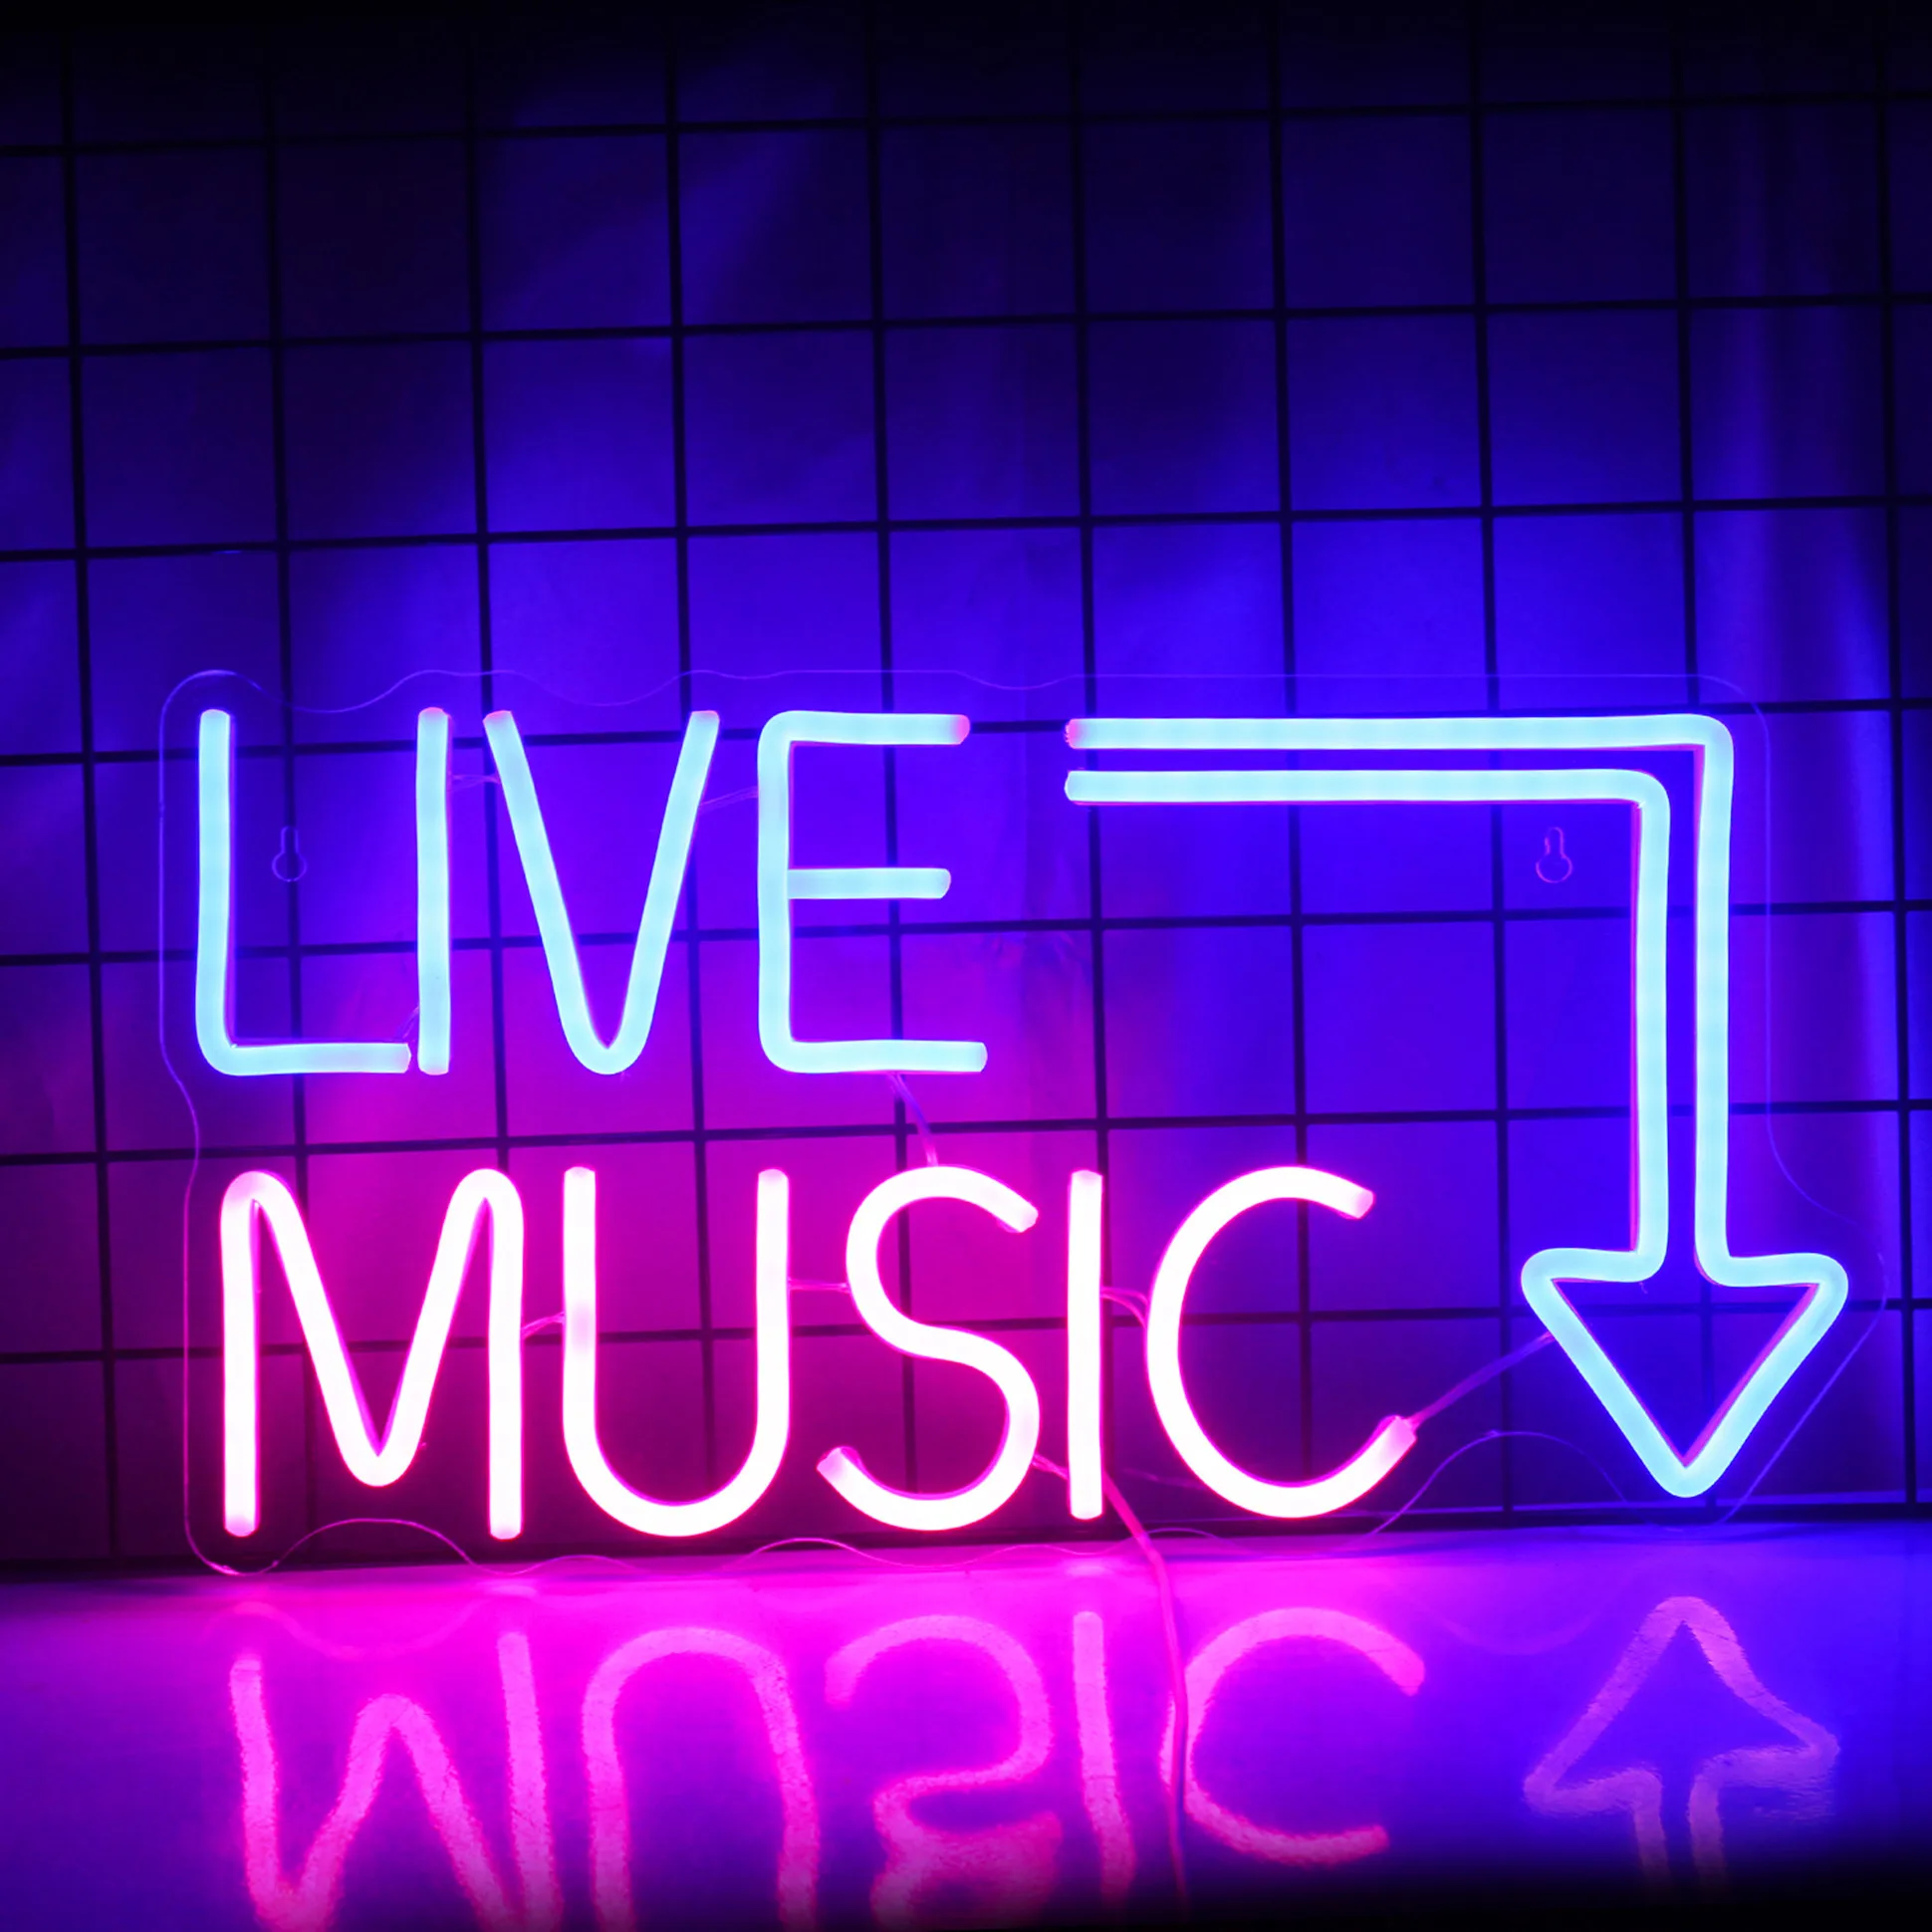 Live Music Neon Sign Music LED Neon Light Letter Light Sign Bar Light up for Beer Bar Music Studio Bedroom Wall Decor Party Club